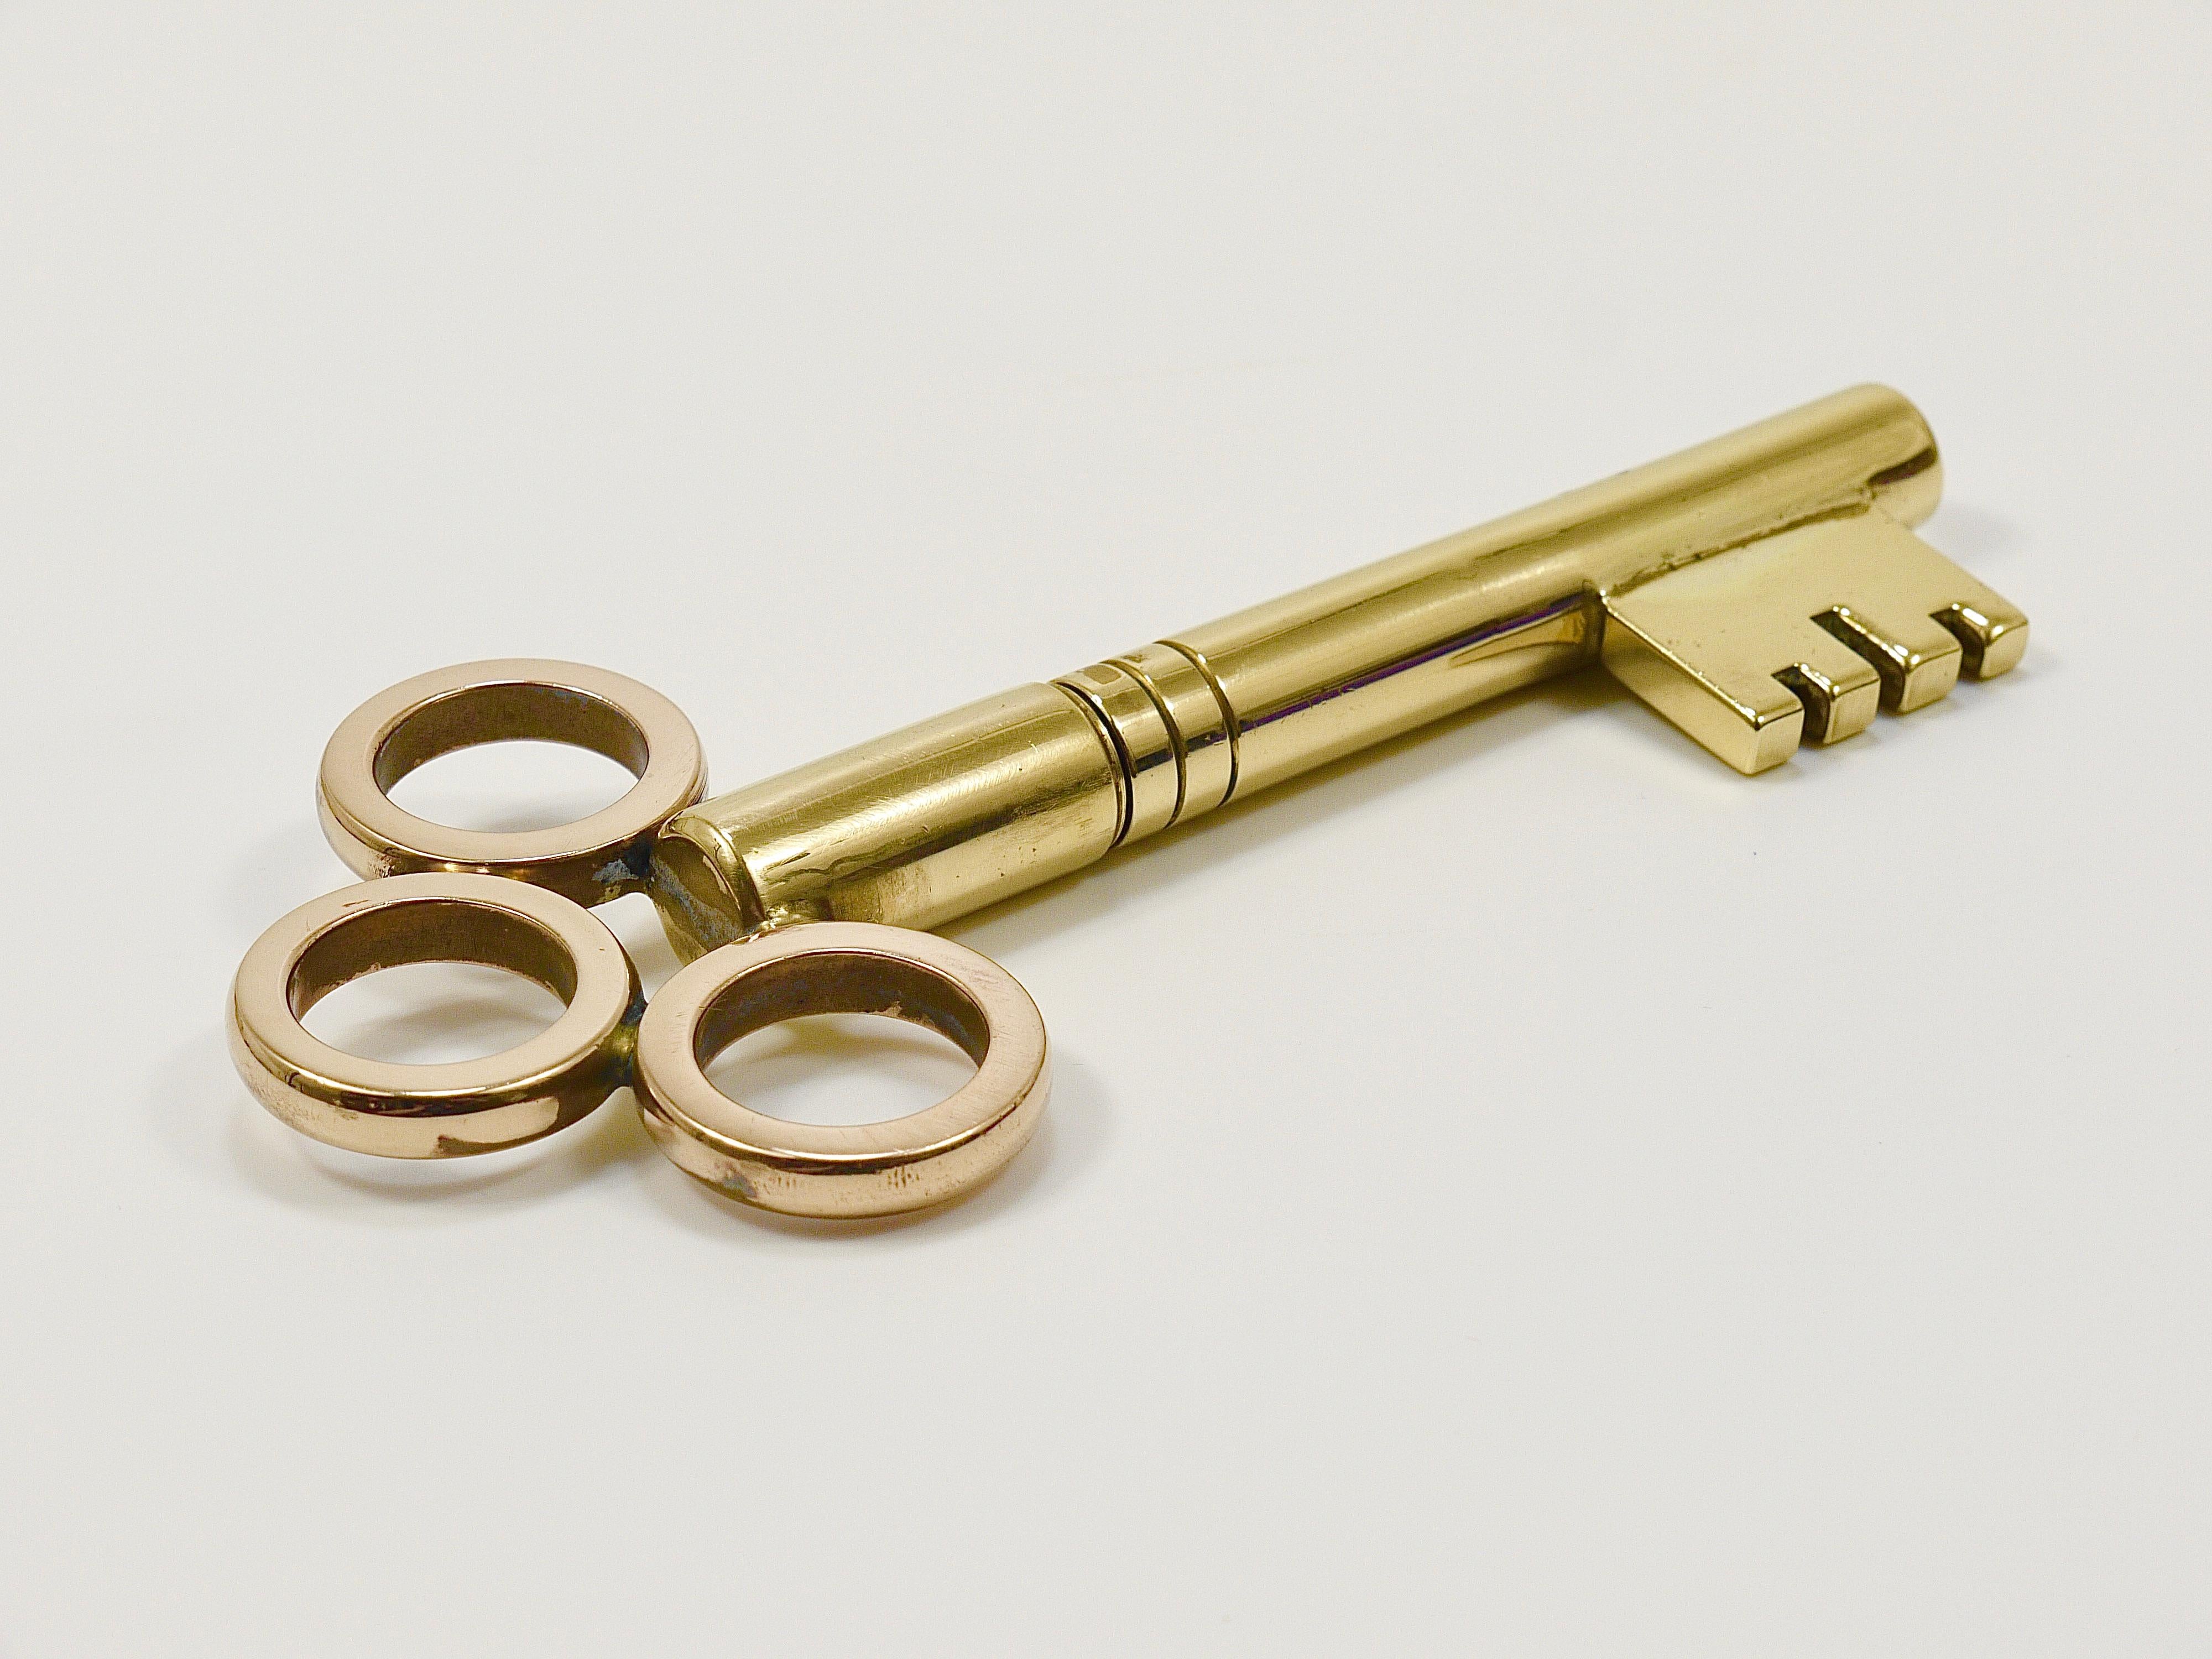 Large Carl Aubock Brass Key Corkscrew Bottle Opener Paperweight, Austria, 1950s For Sale 11